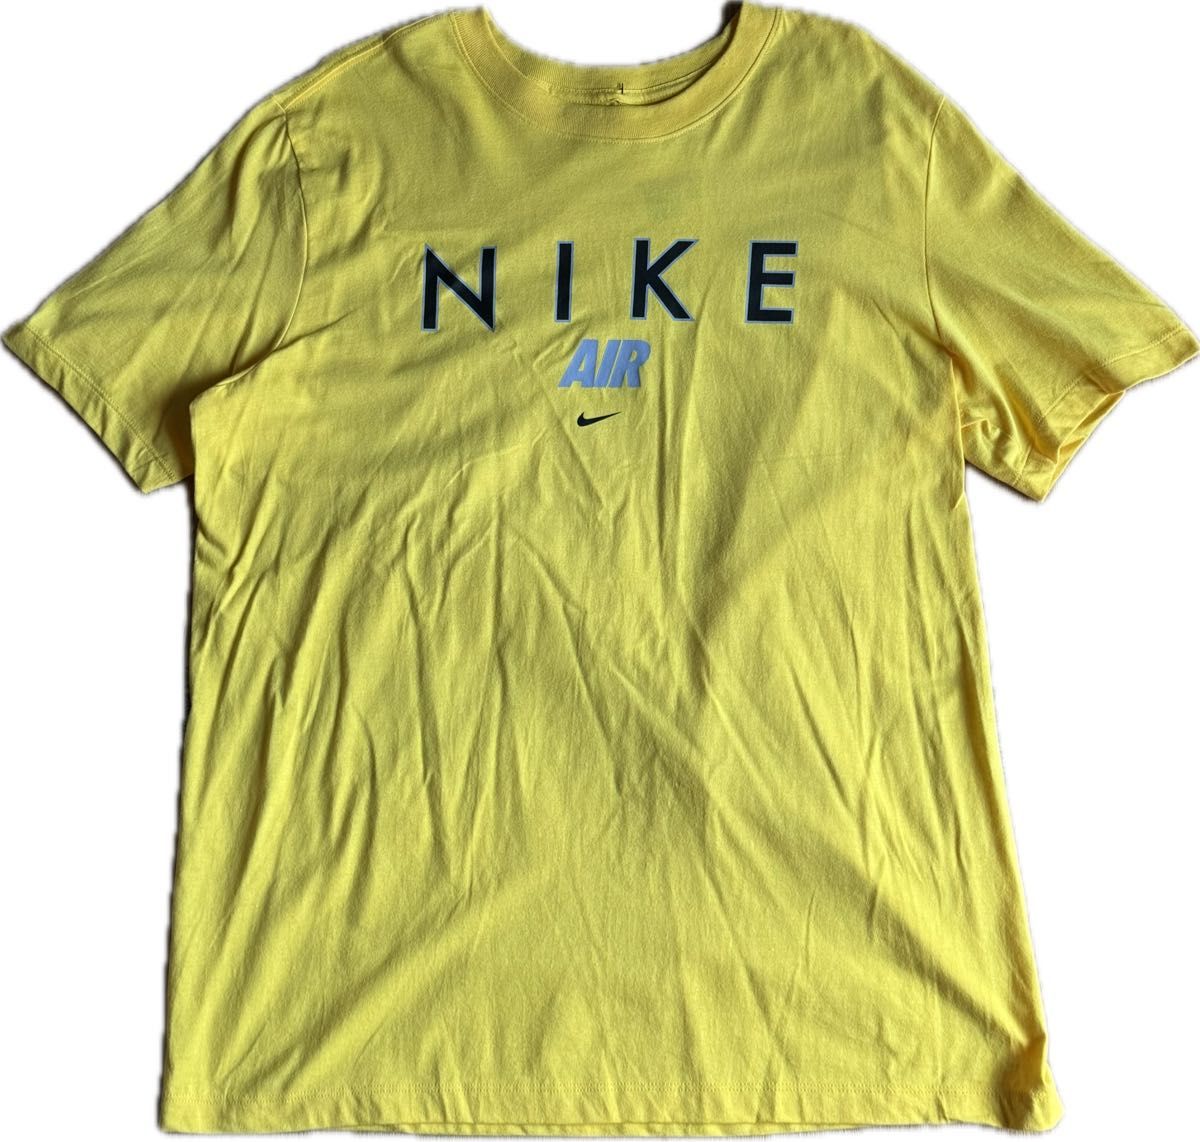 NIKE Tシャツ ナイキ イエロー 日本未発売 US企画 L 新品